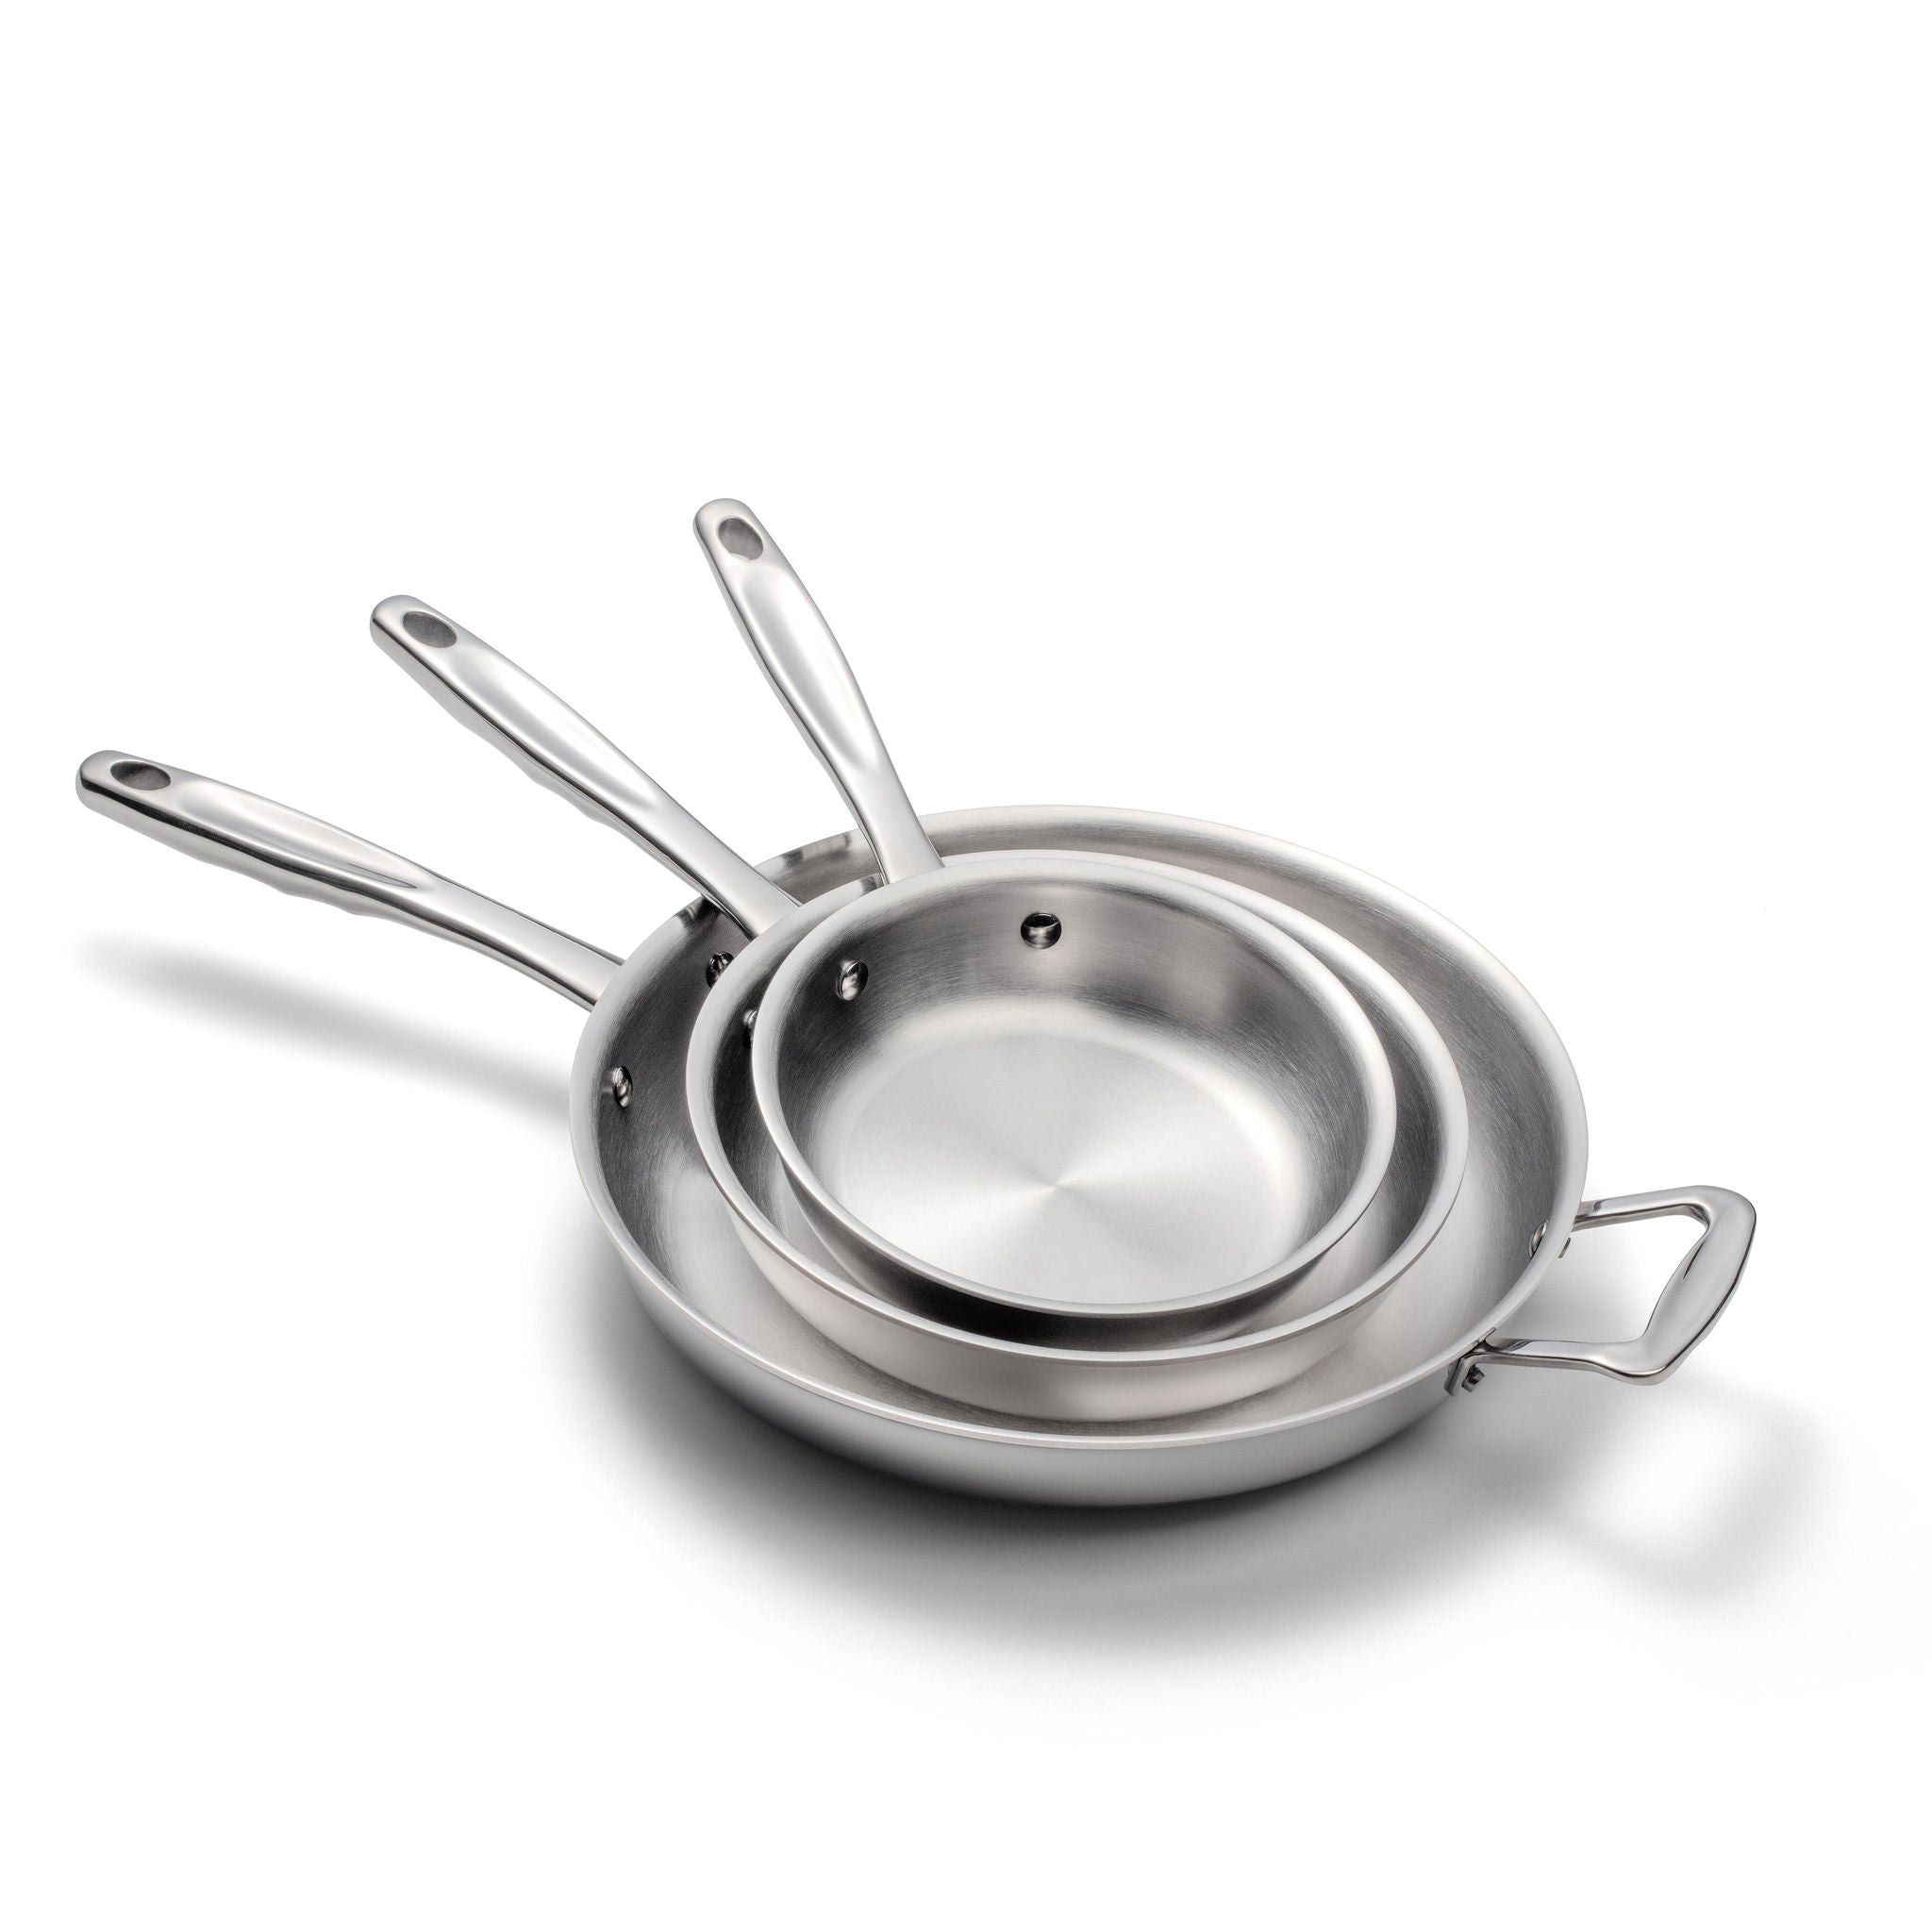 360 Cookware 3- Piece Fry Pan Set, Stainless Steel, Oven Safe, Ergonomic Handles